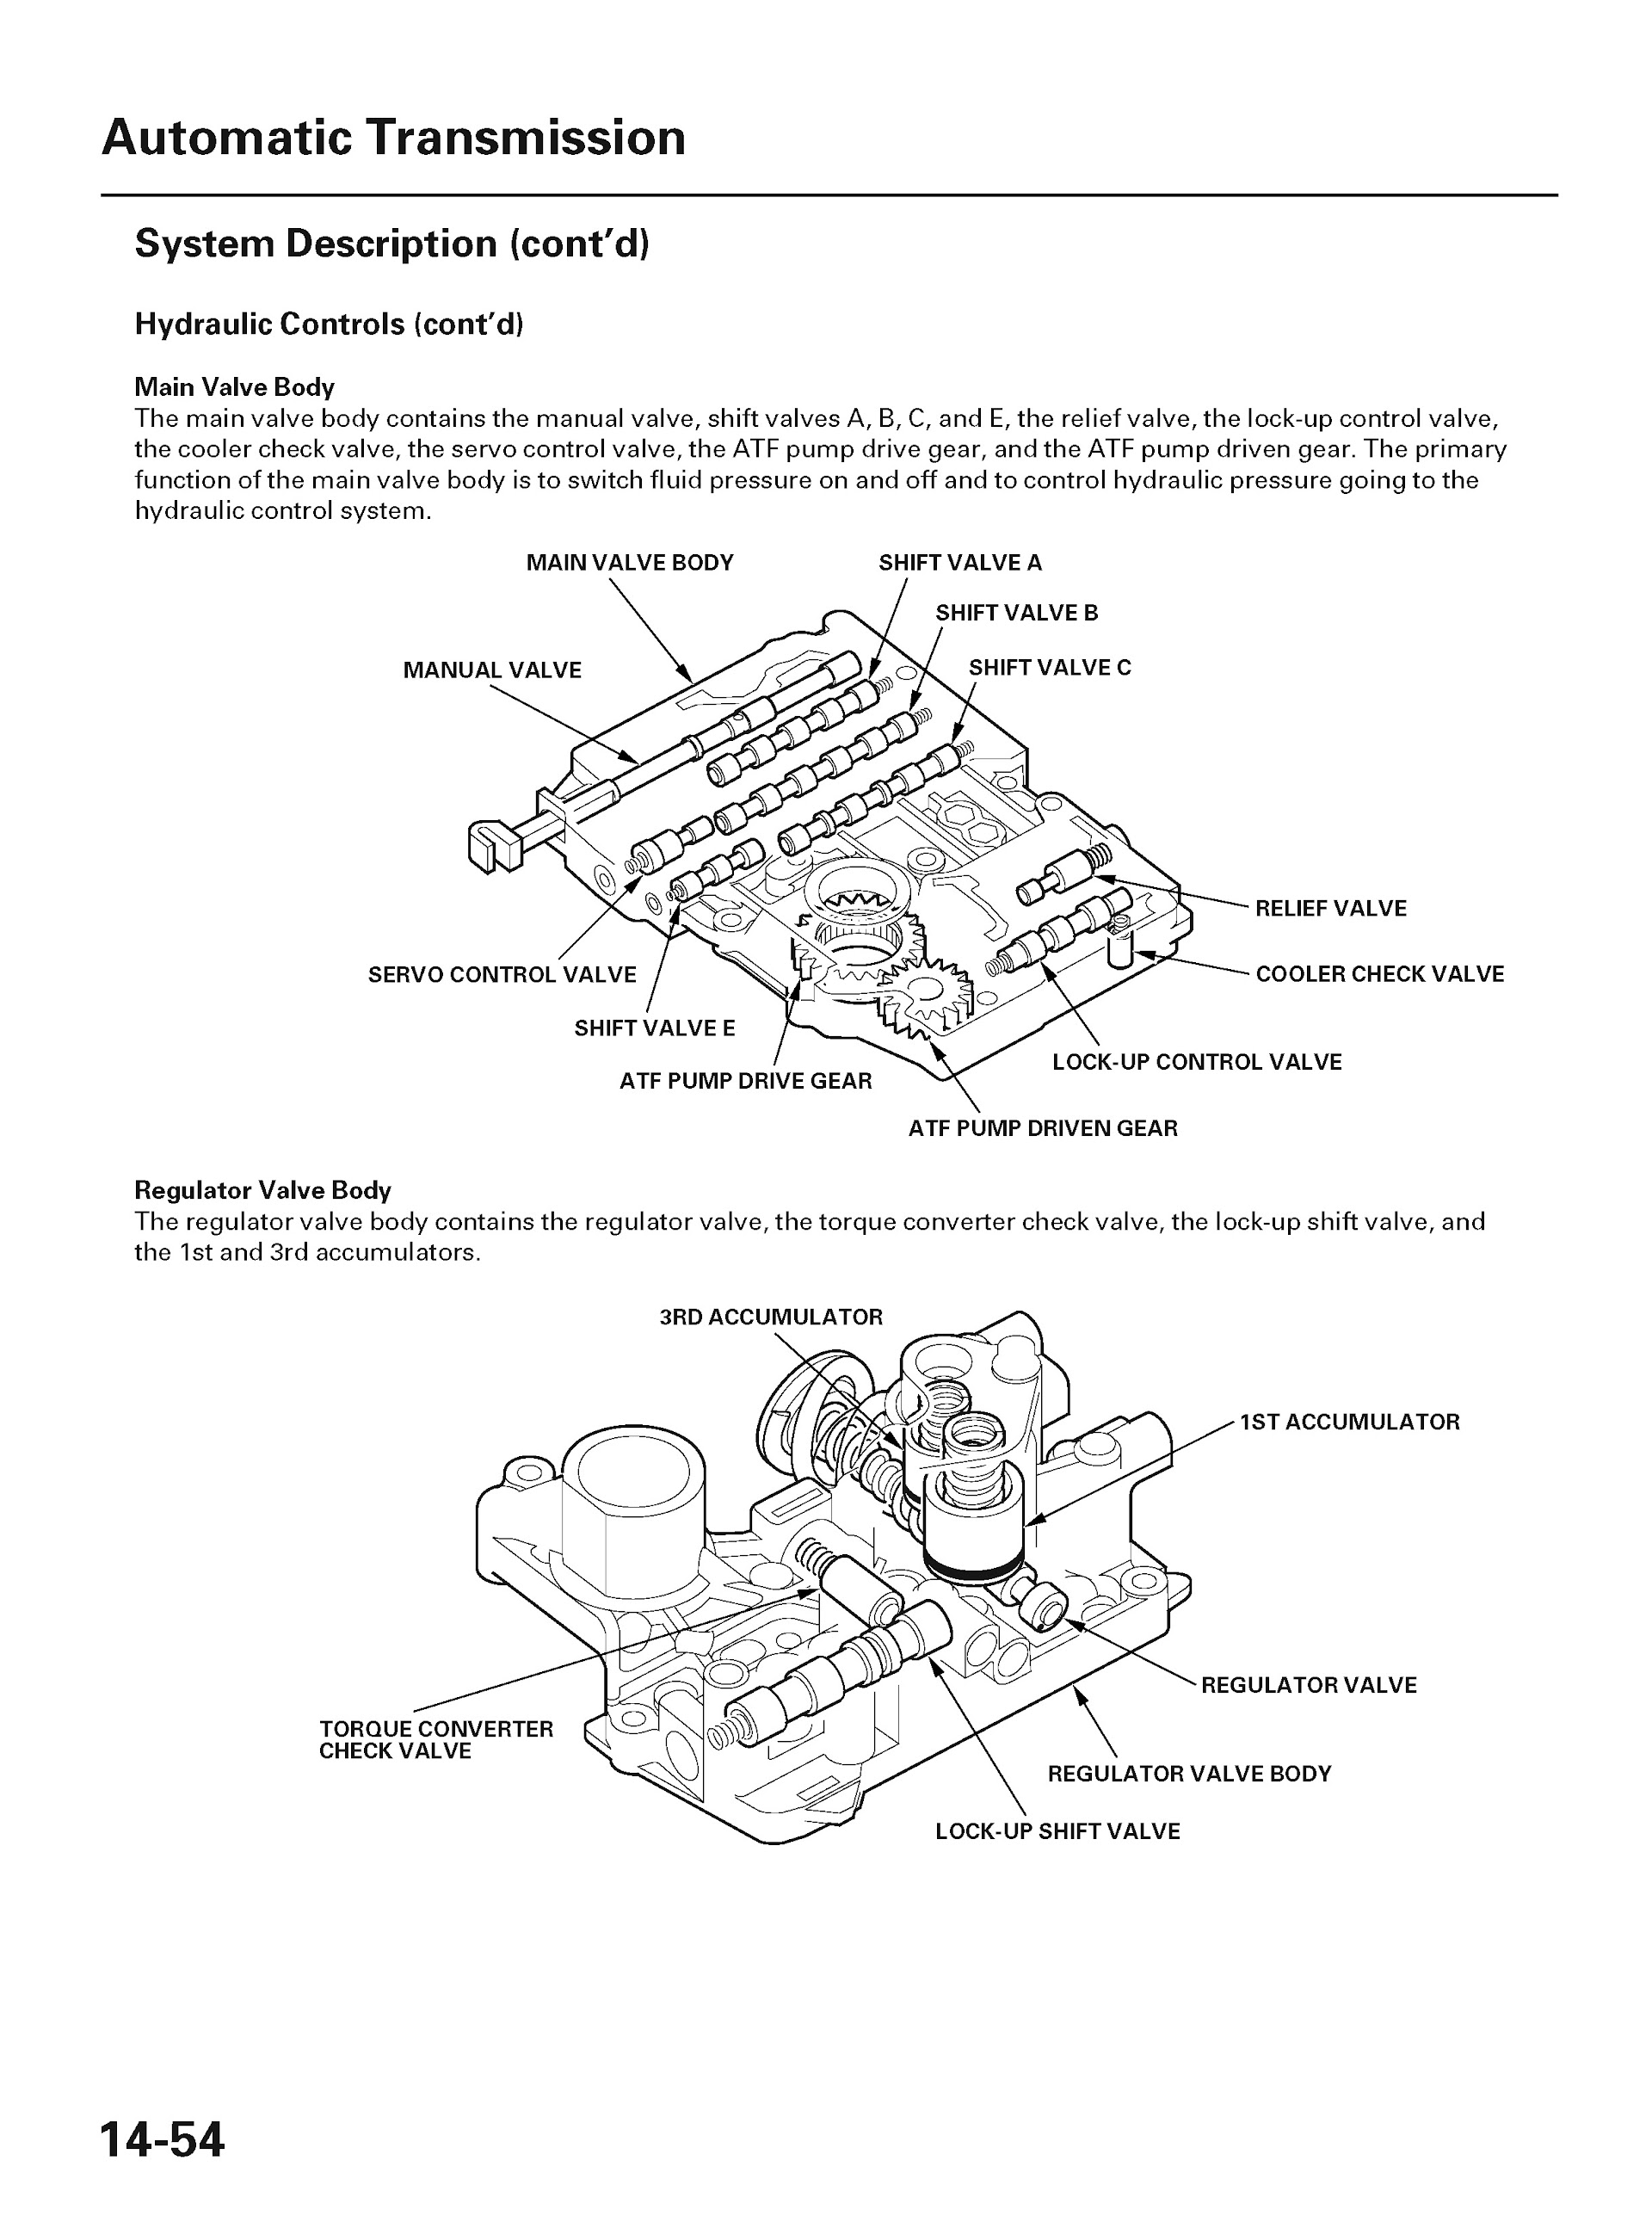 2009 Acura CSX Repair Manual, Automatic Tranmission